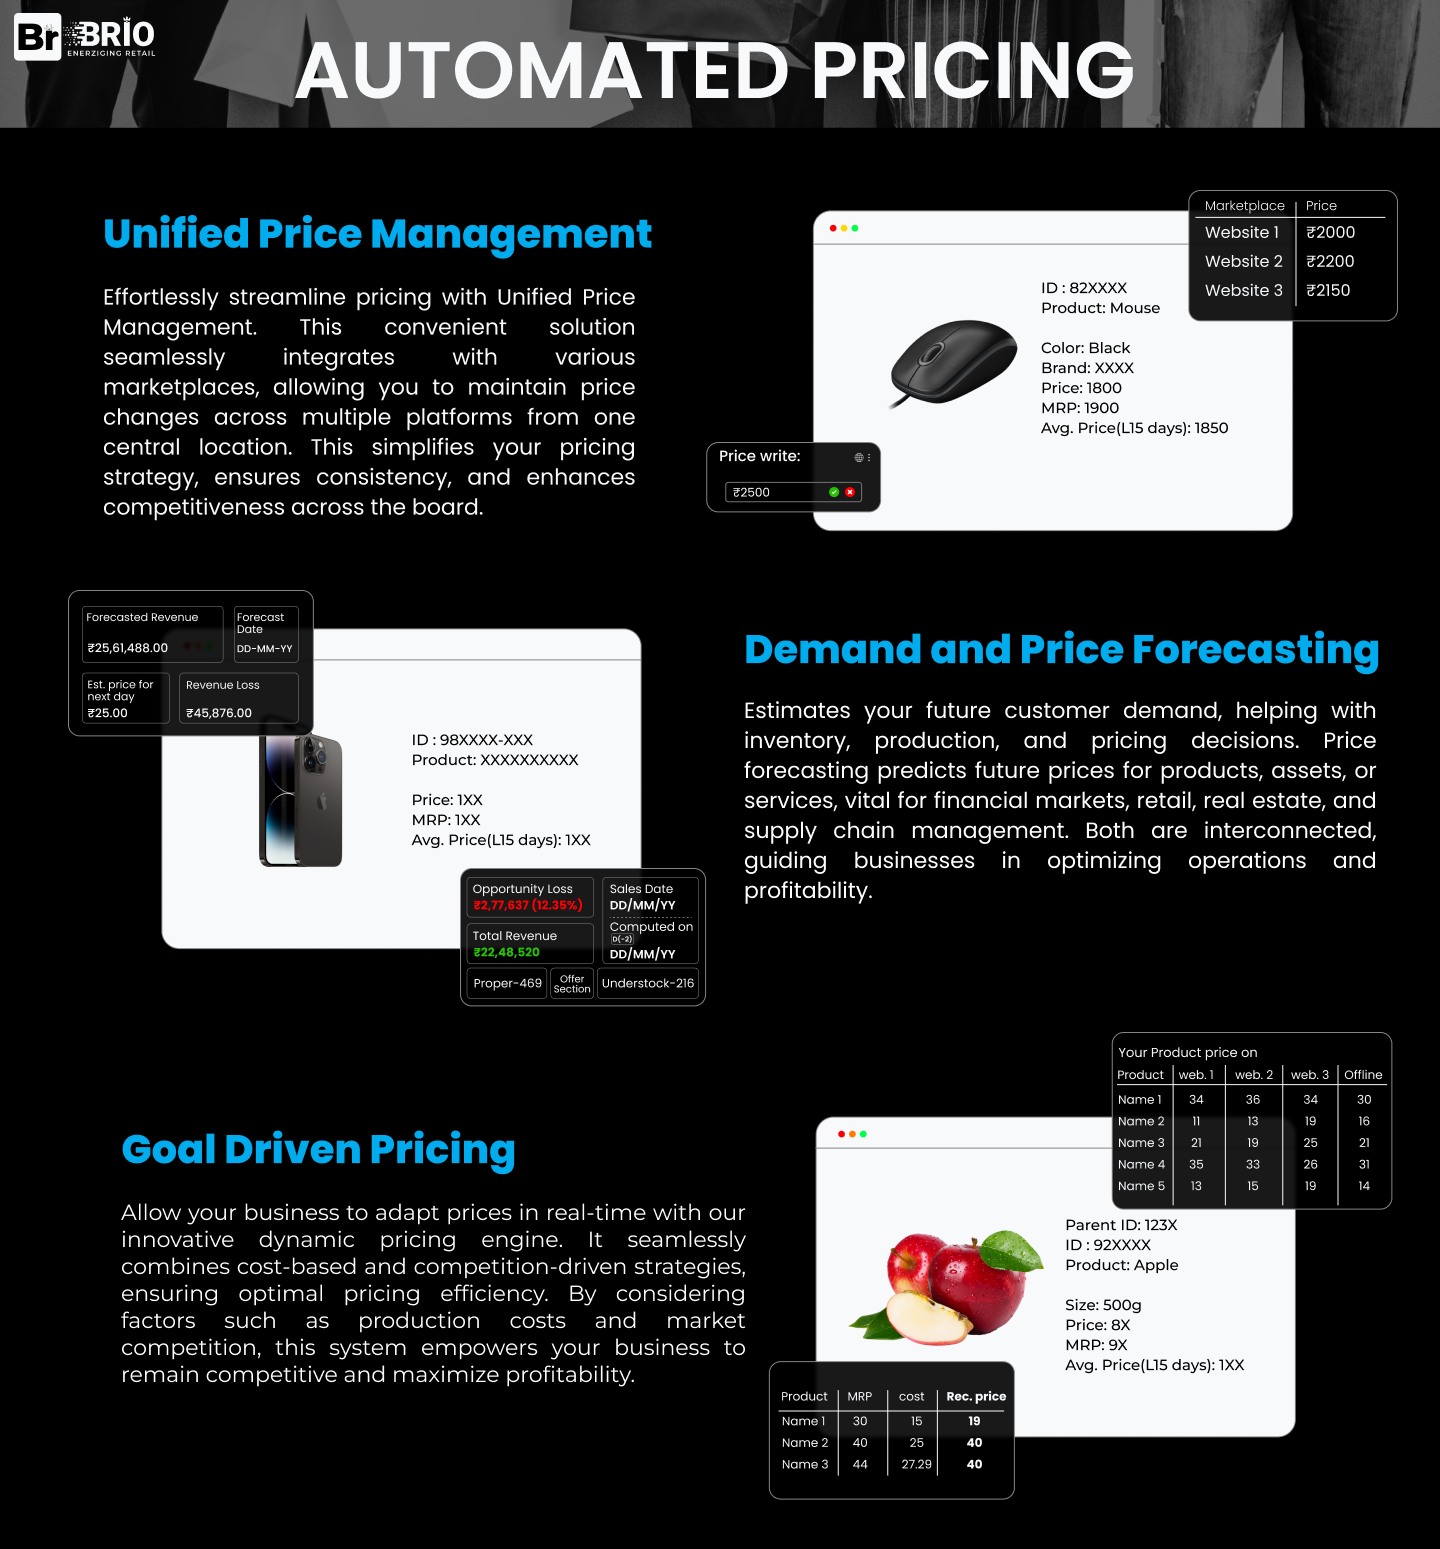 brioanalytics.ai -Automated Pricing